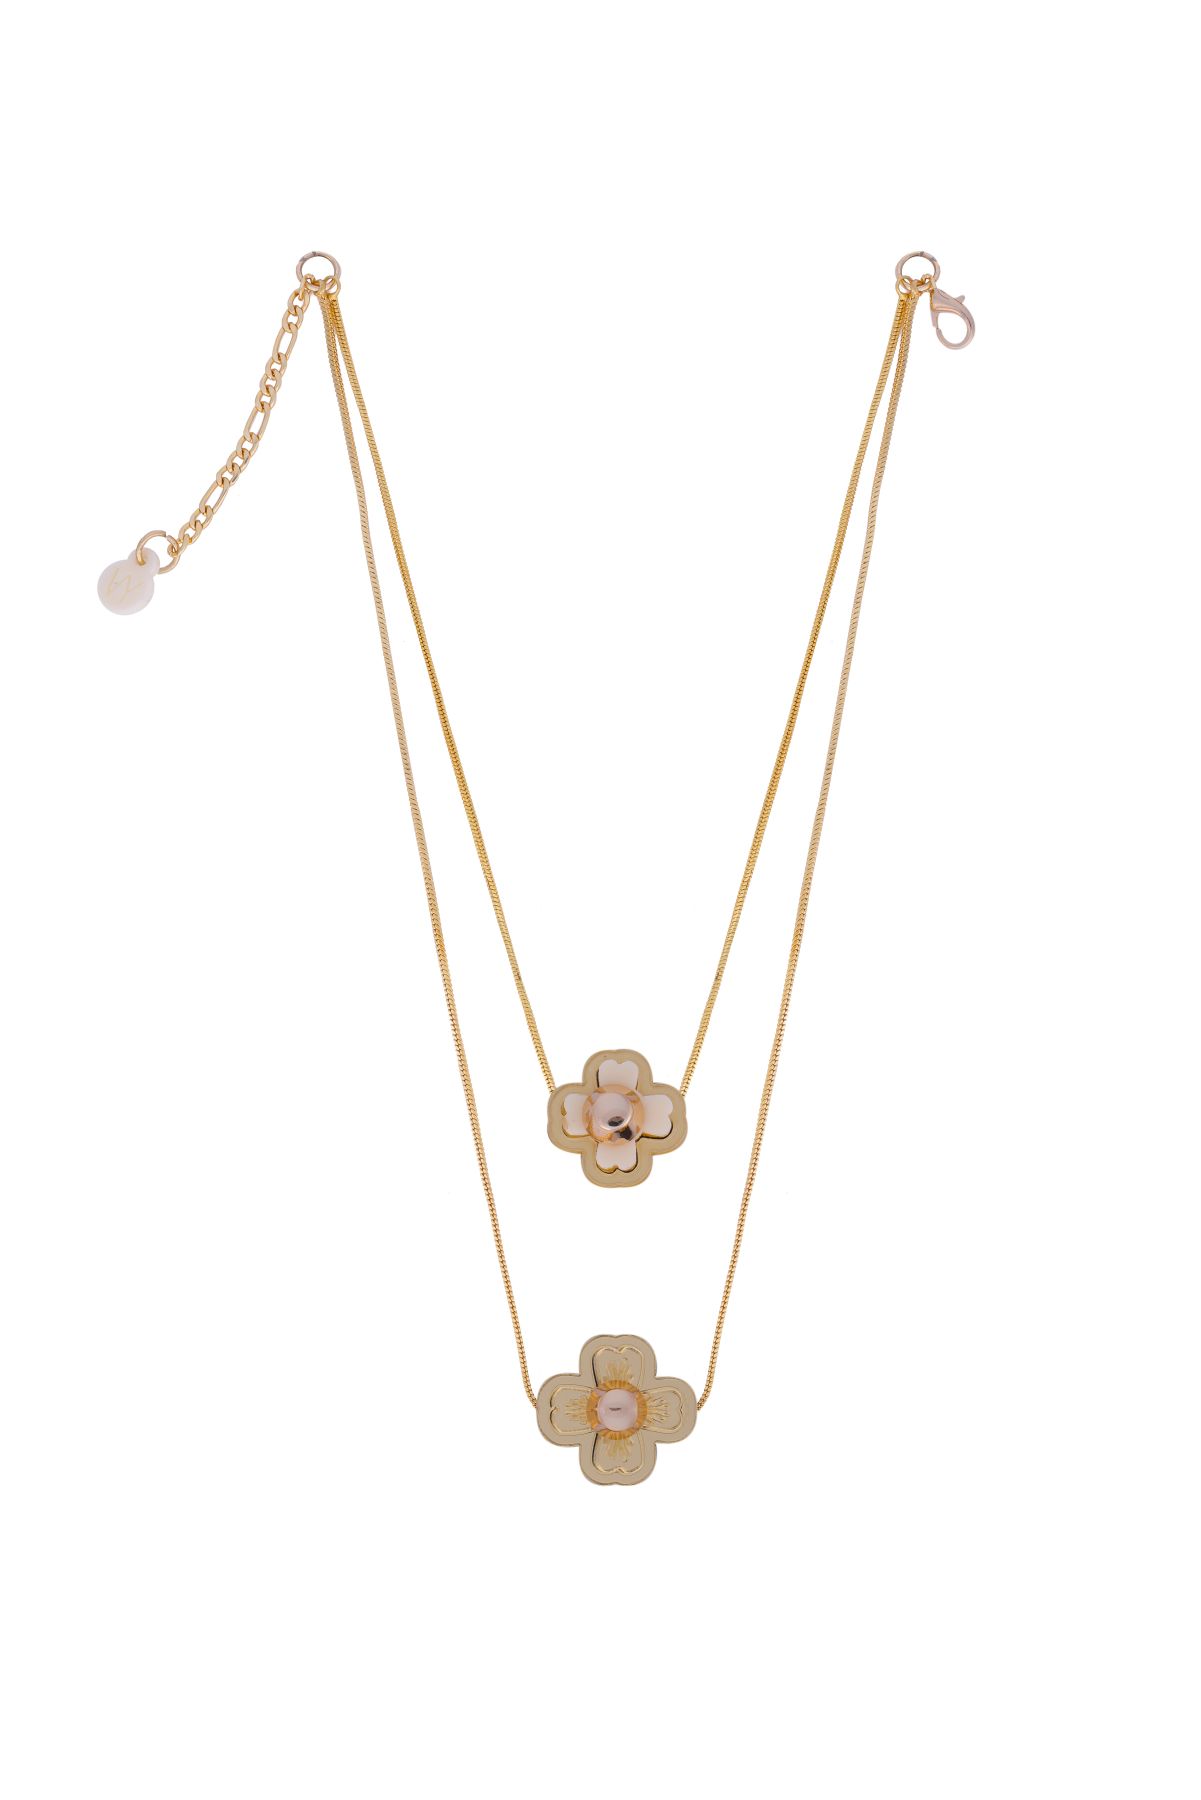 Oyster Necklace choker pendants ( set of 2 )